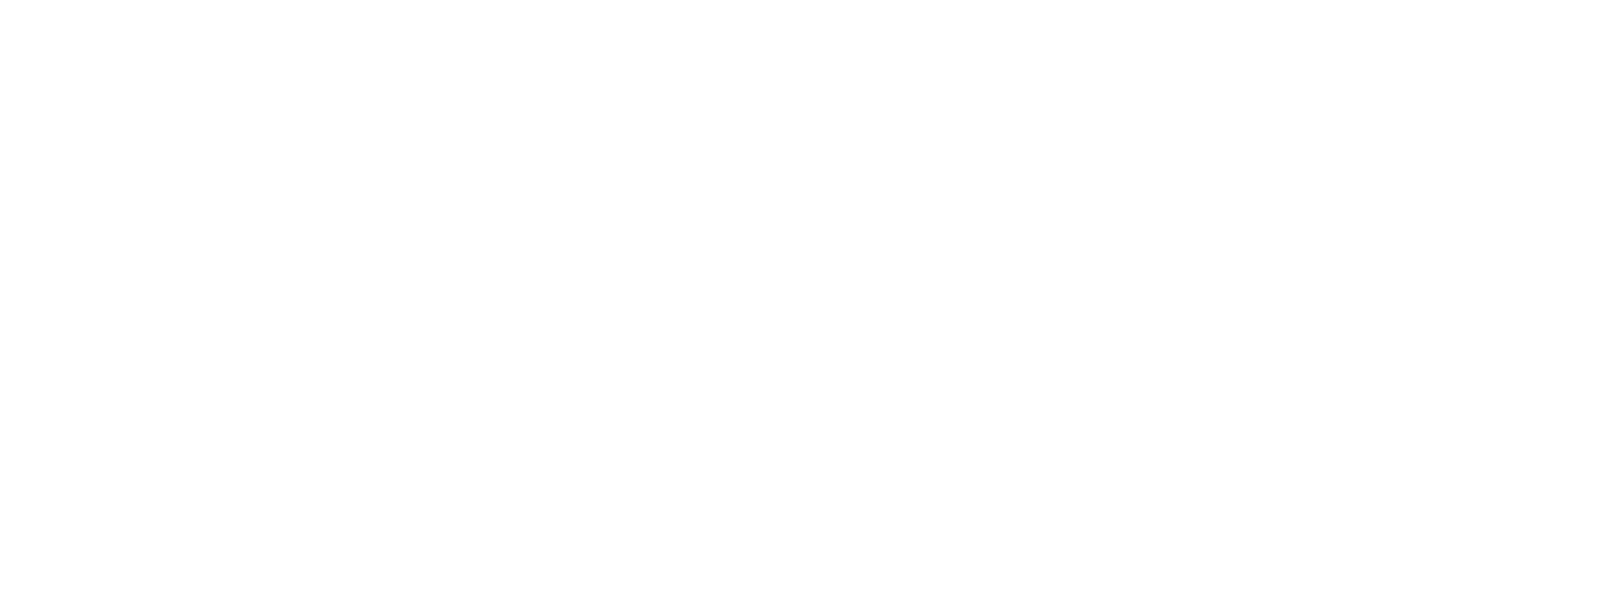 ET 2019 & IoT Technology 2019